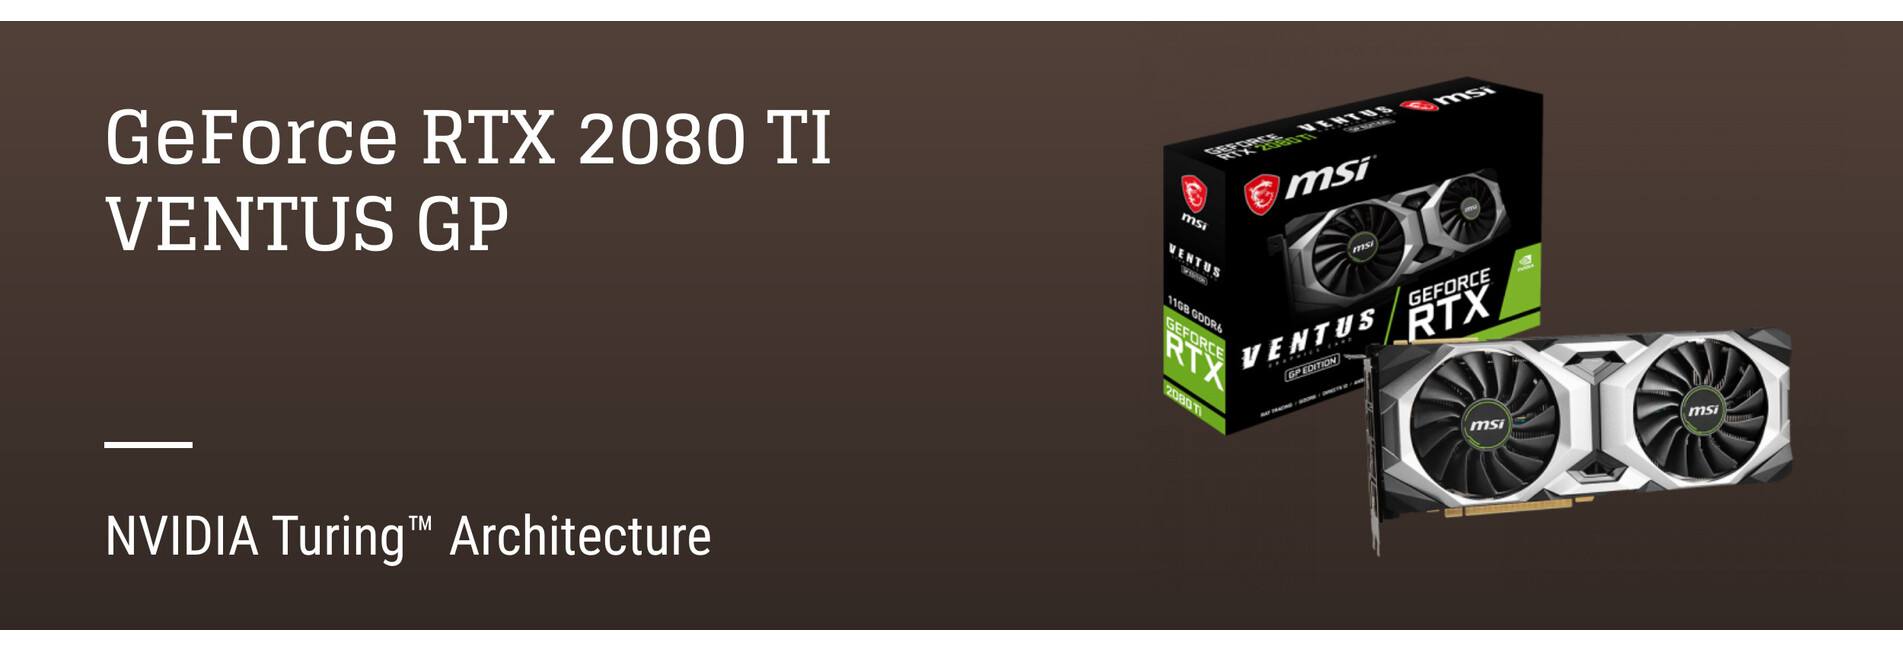 Transoft Infotech - Gaming, Graphics Card, GEFORCE RTX 2080 TI VENTUS GP Product